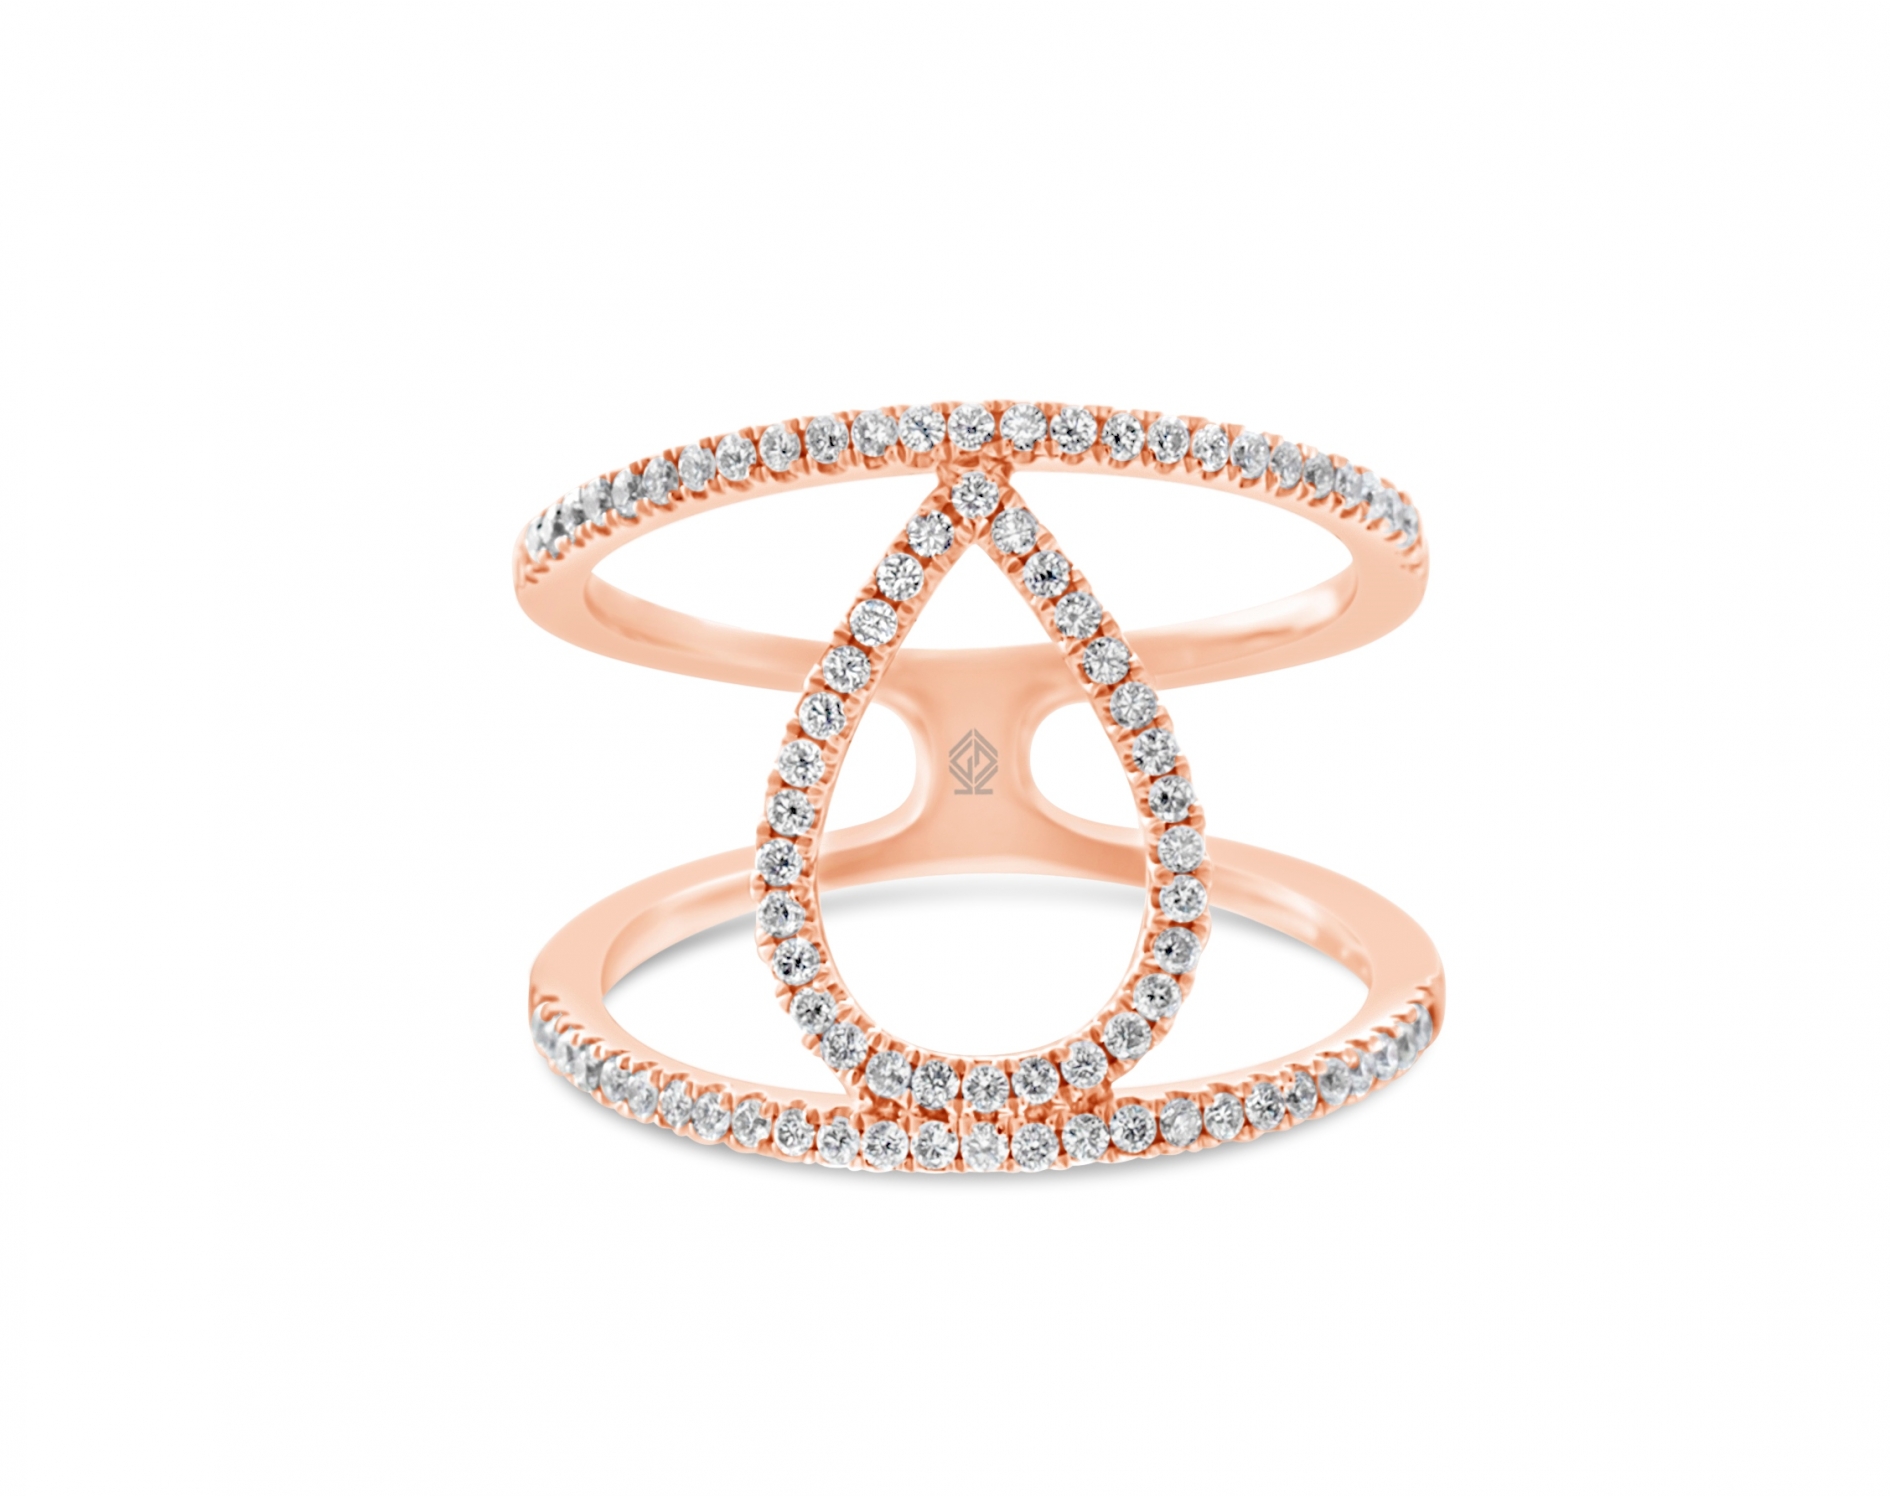 18k rose gold pear-fashion round shaped diamond ring Photos & images